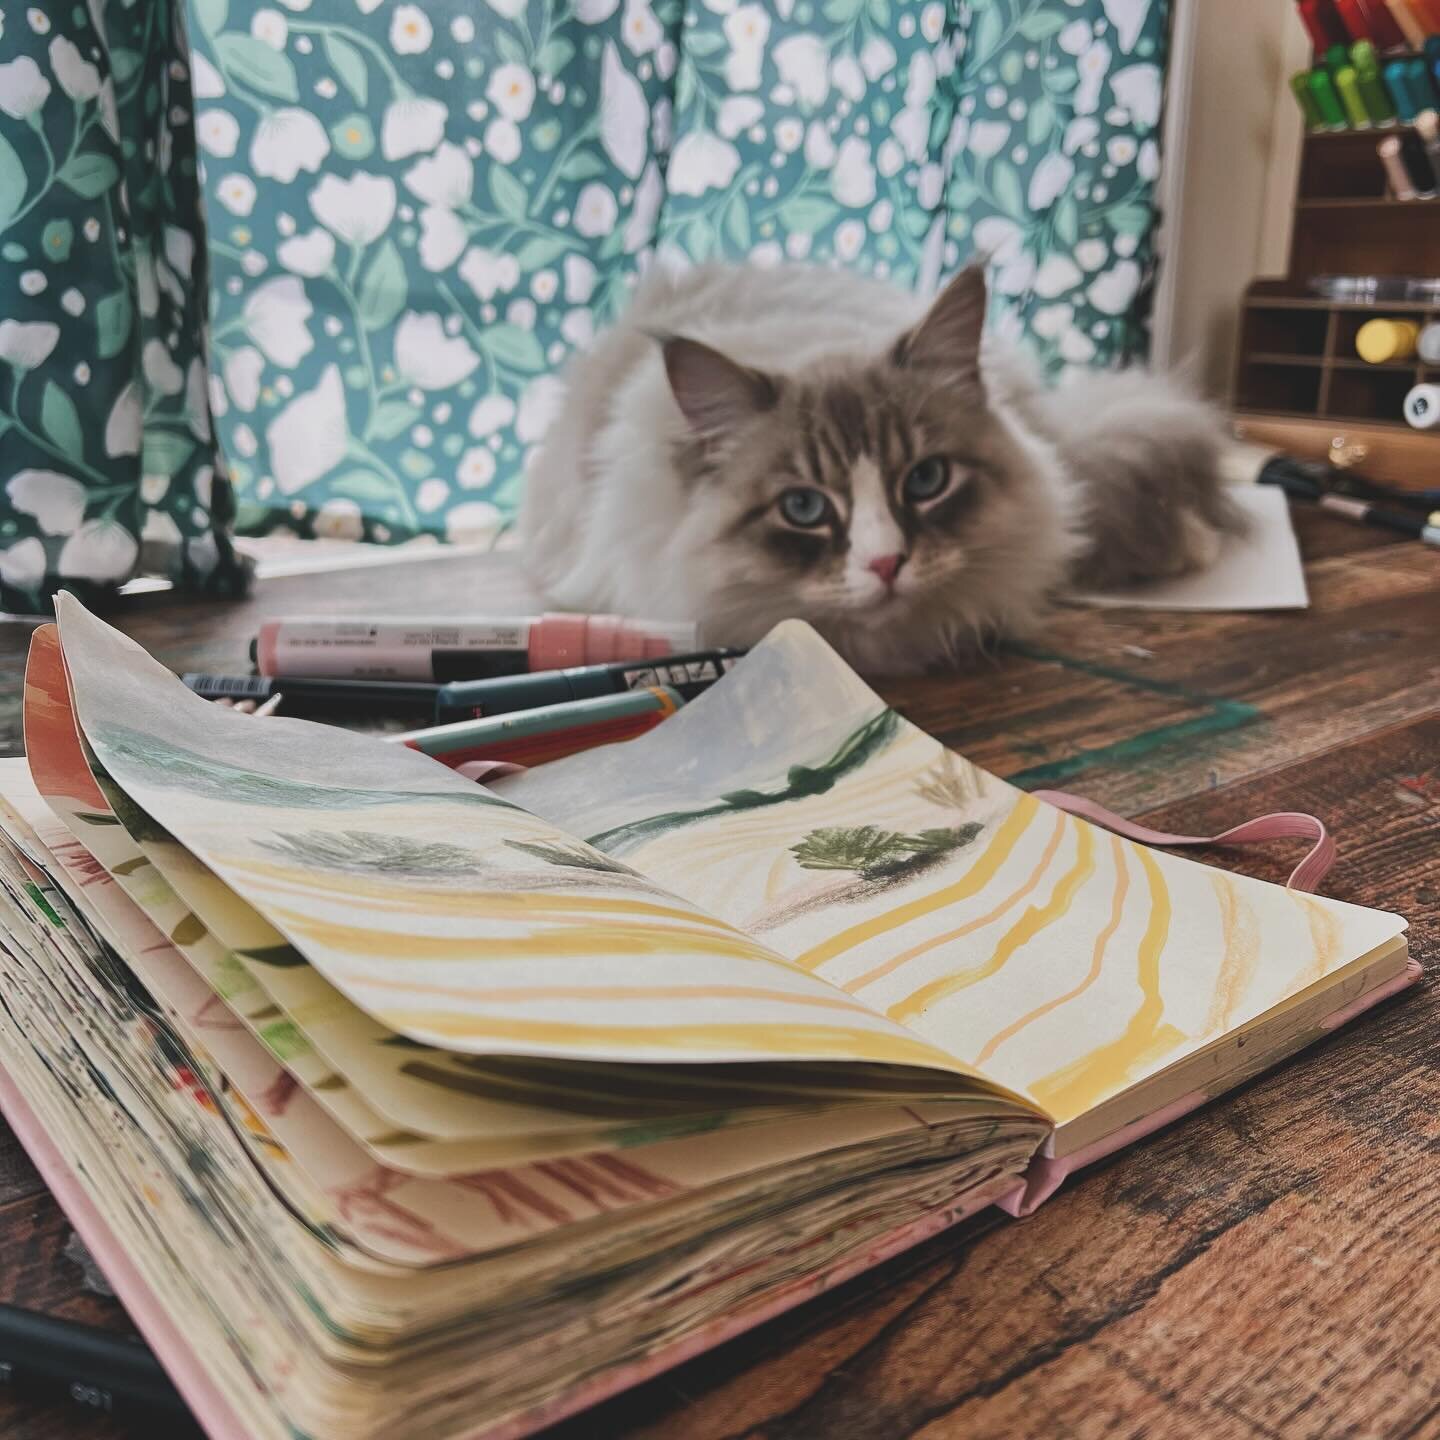 Cat. Sketchbook. Pencils. Markers. The Dream.

#studiocat #dailysketches #dailysketchbook #abstractlandscape #newenglandartist